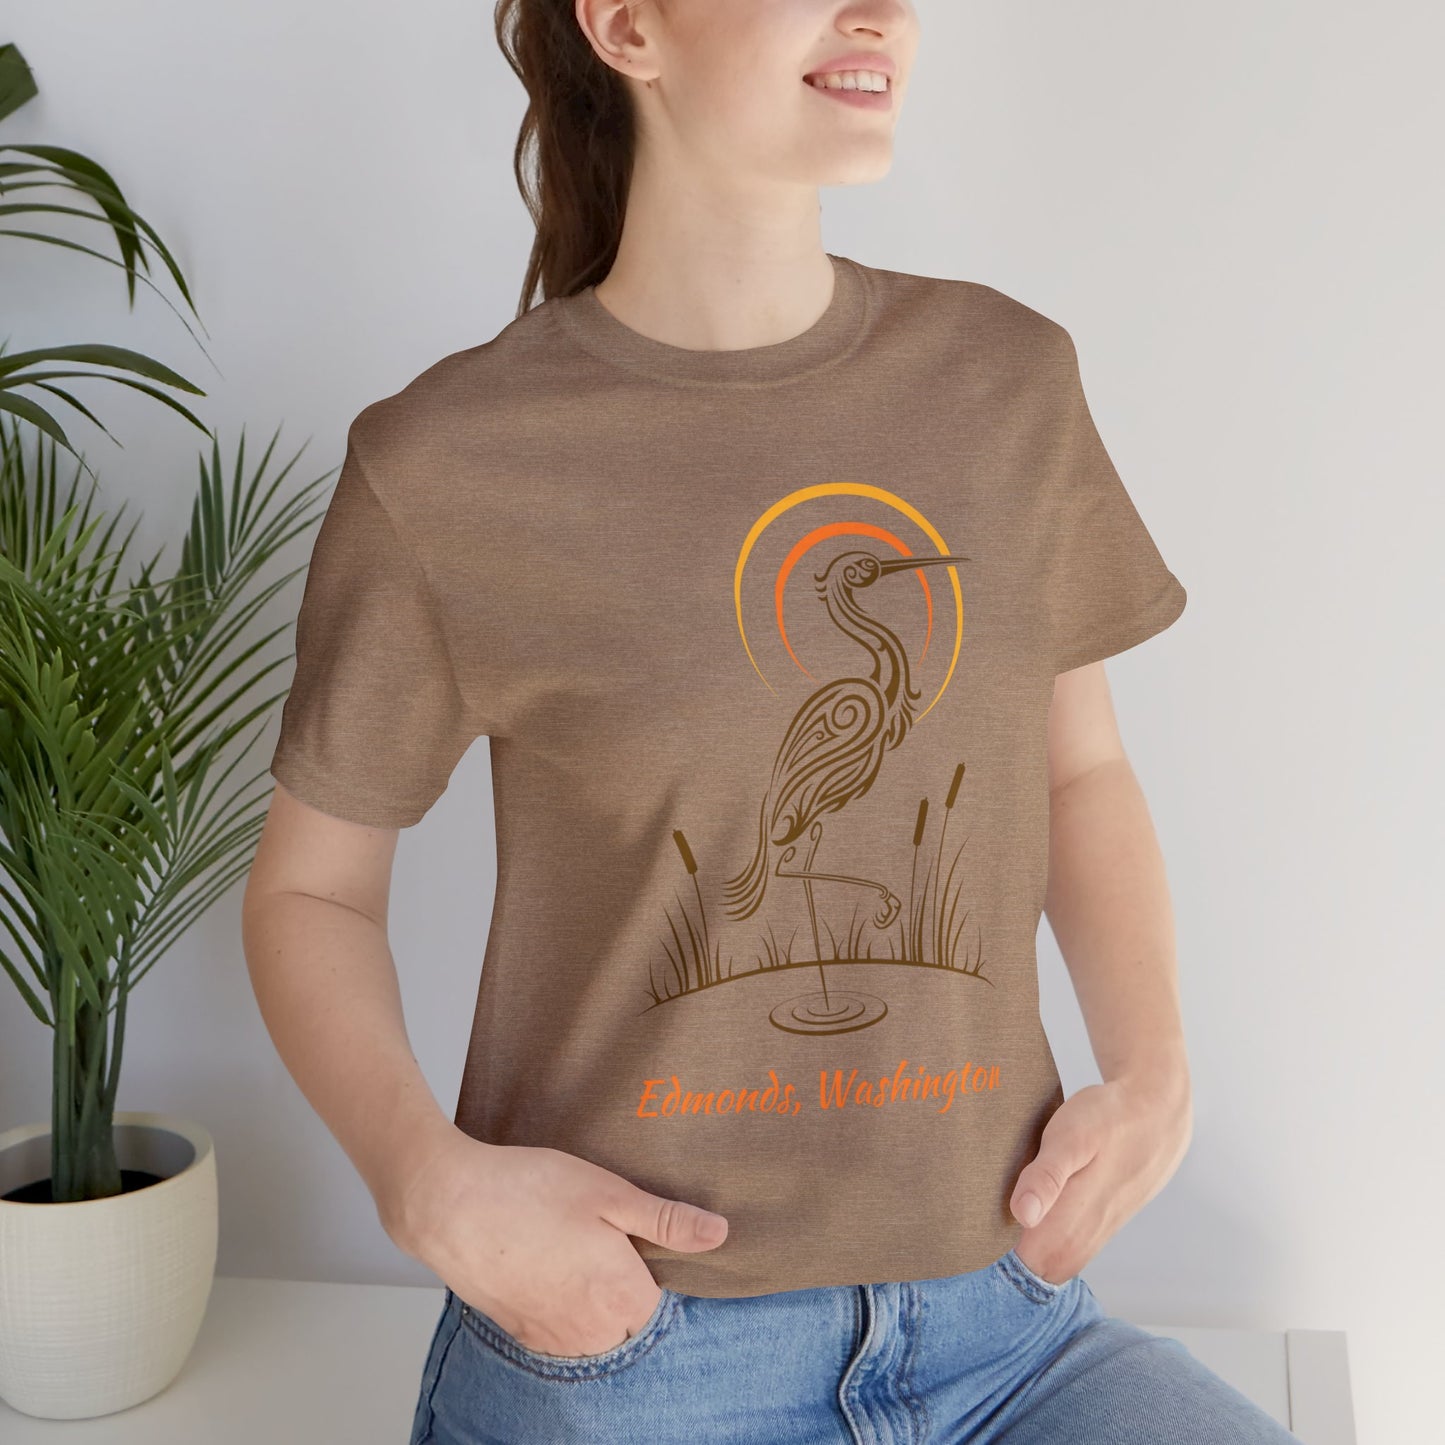 Edmonds Heron T-shirt